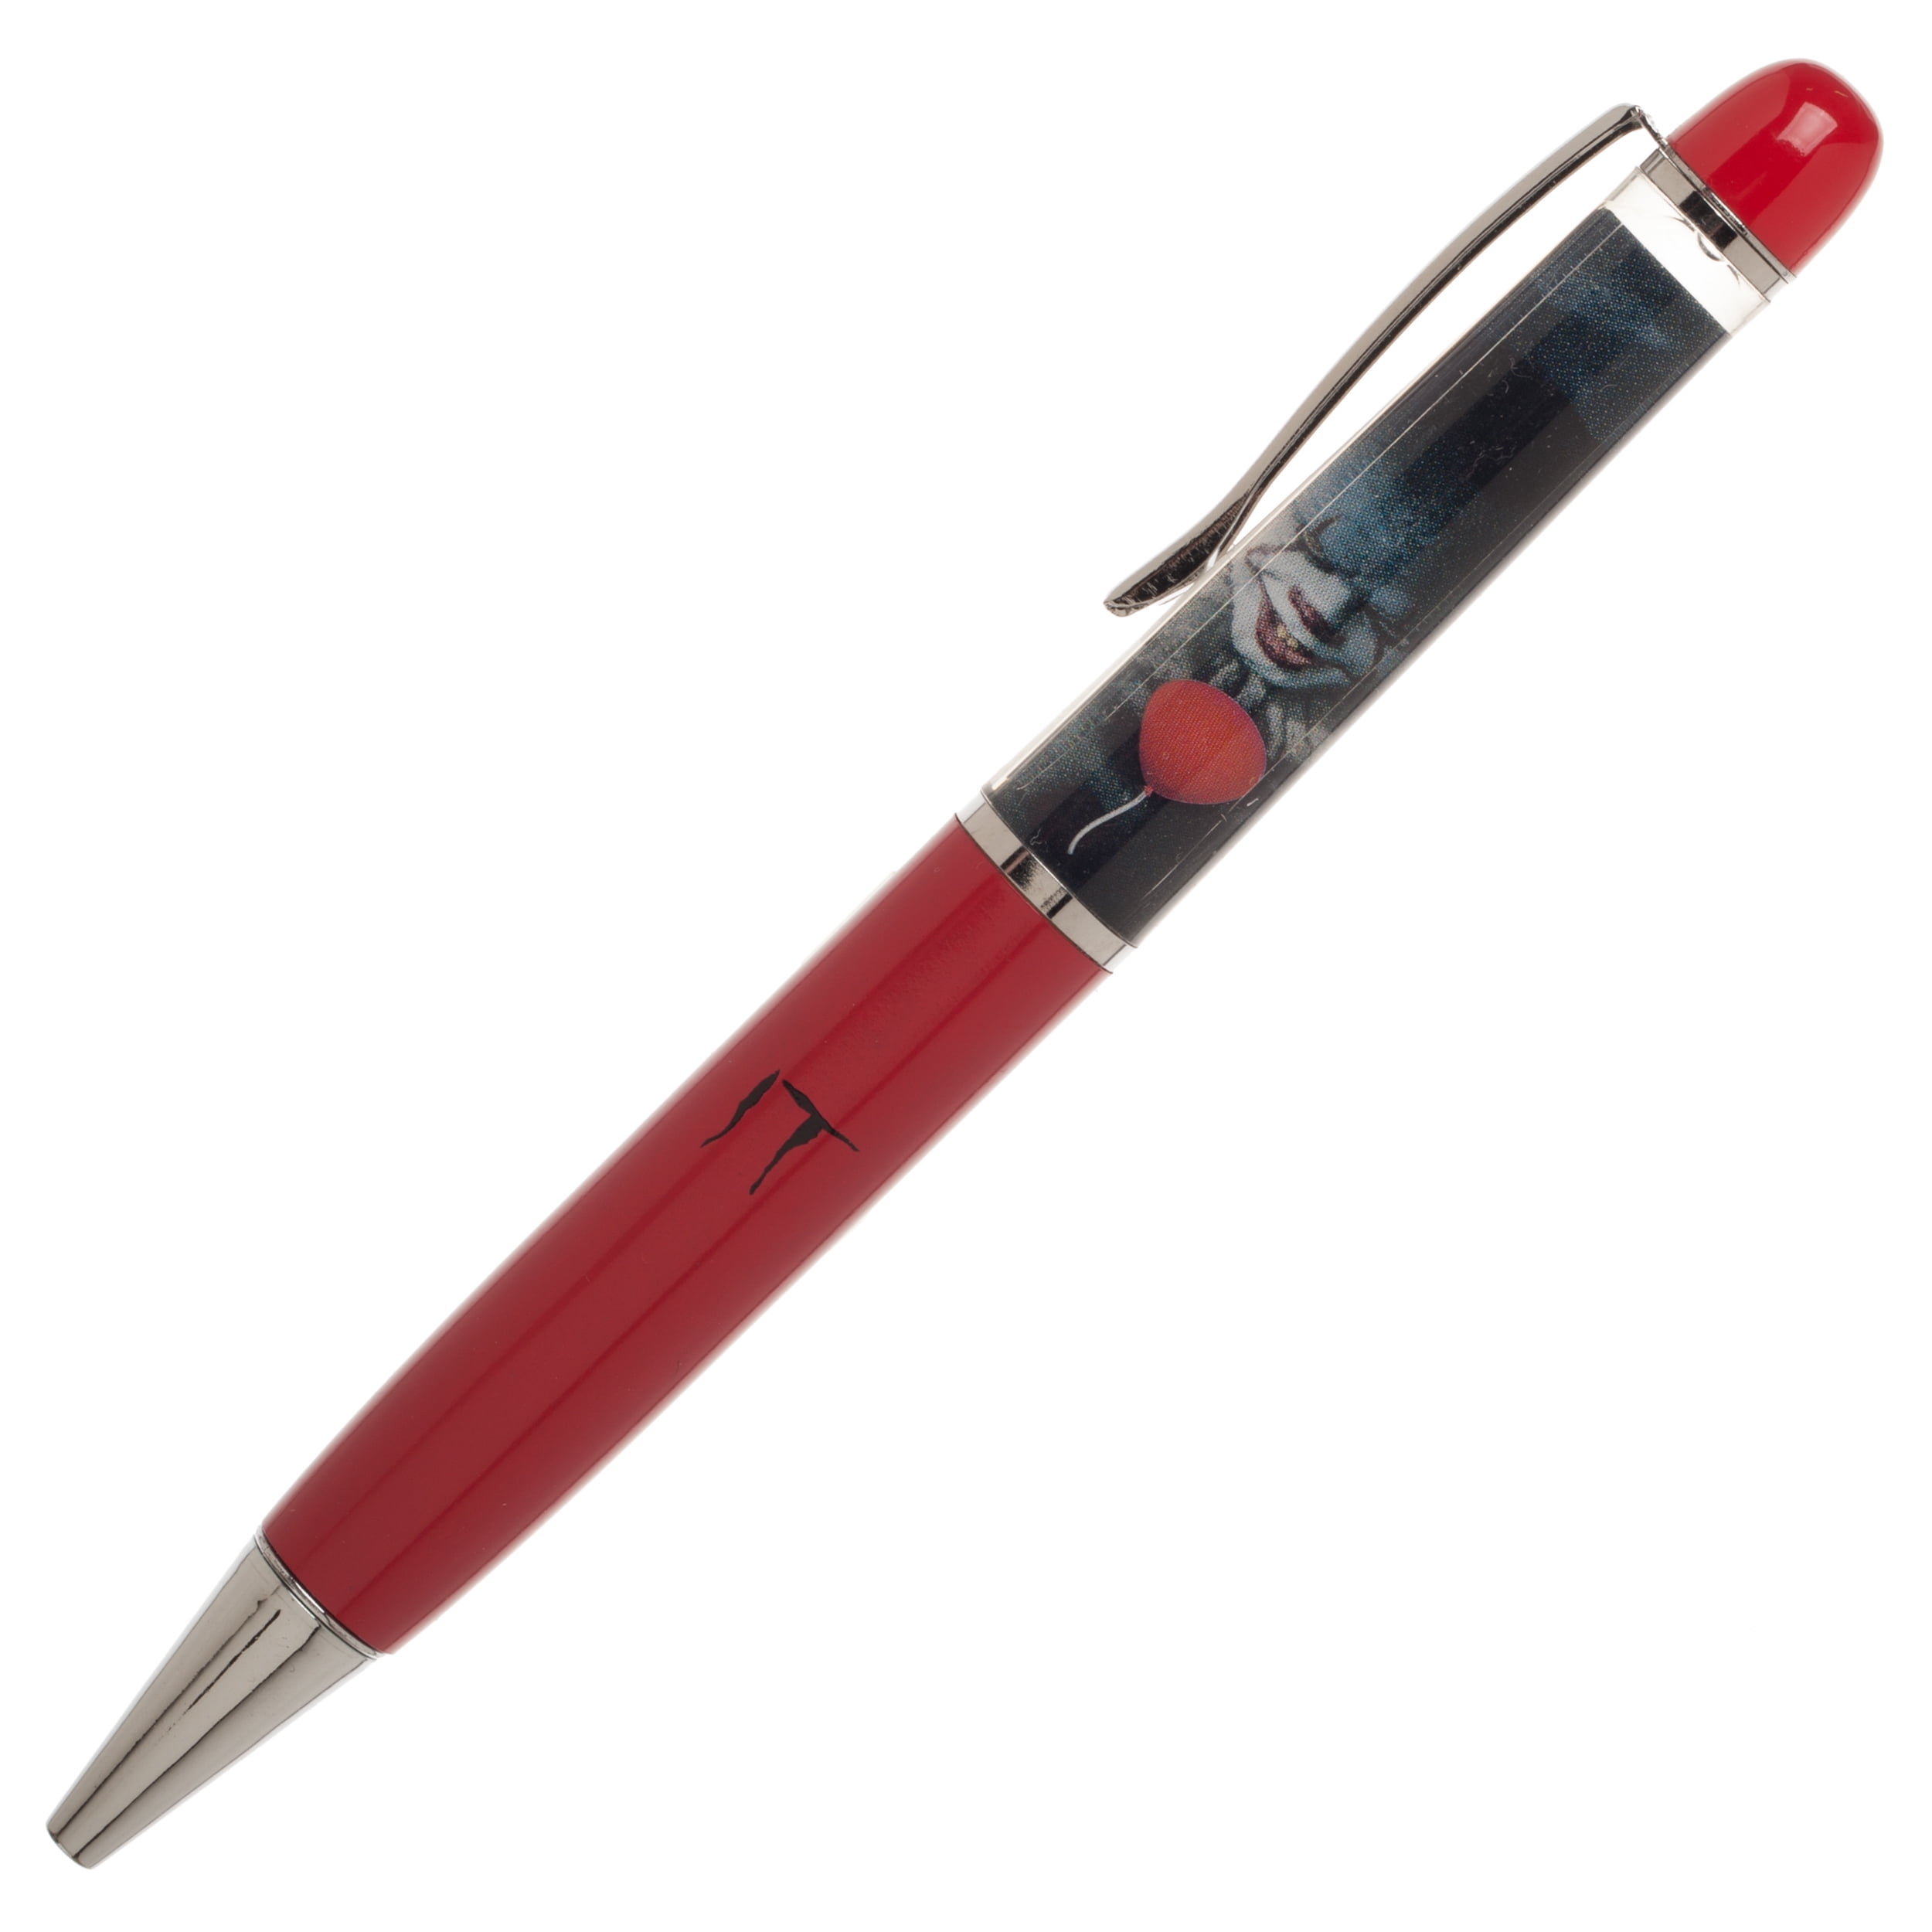 Hesroicy Glitter Shell Ballpoint Pens - Constant Ink Inspirational